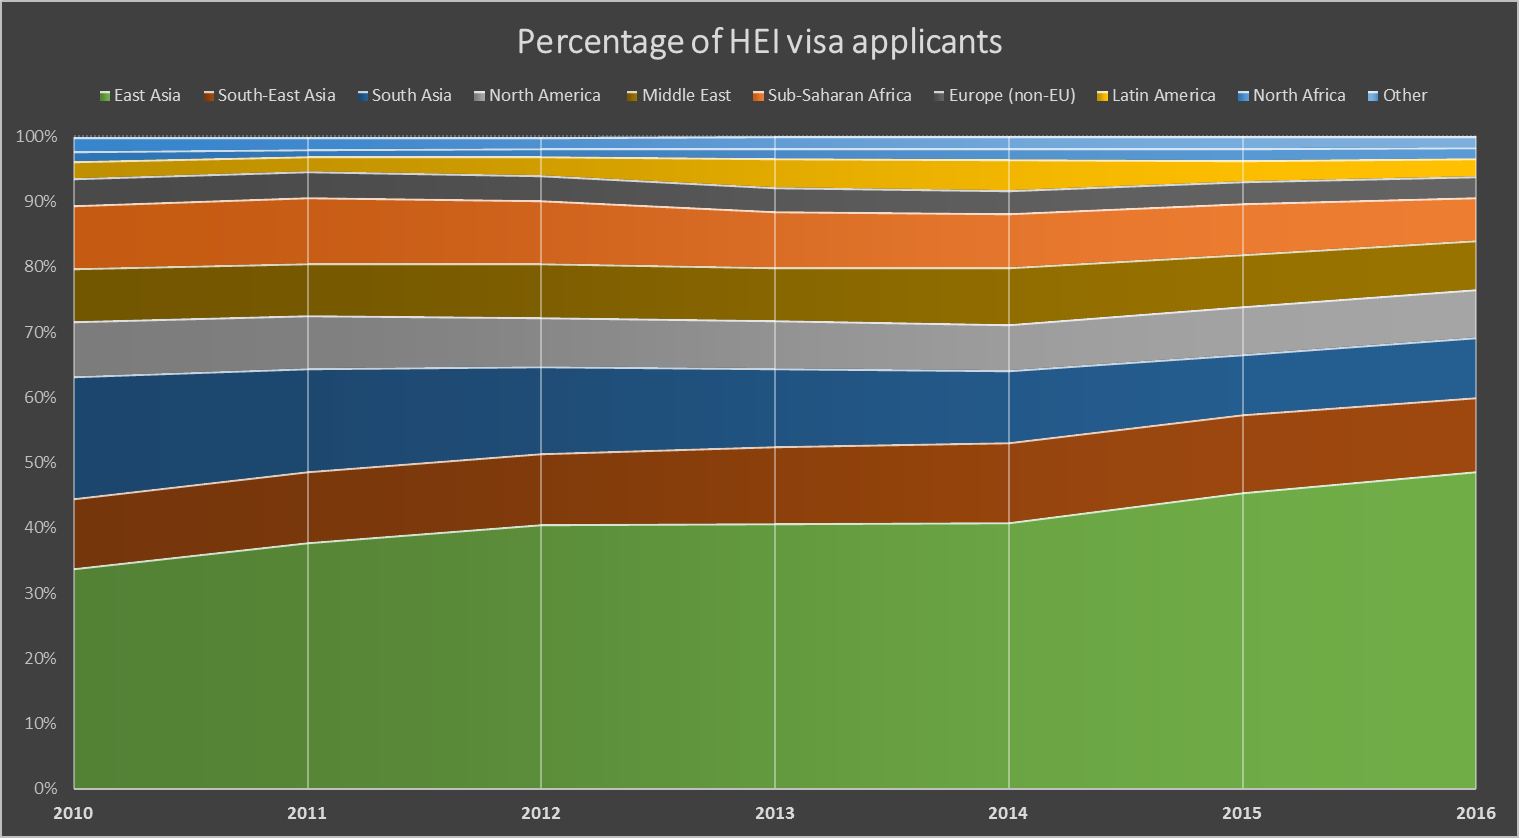 Visa applicants to universities by region